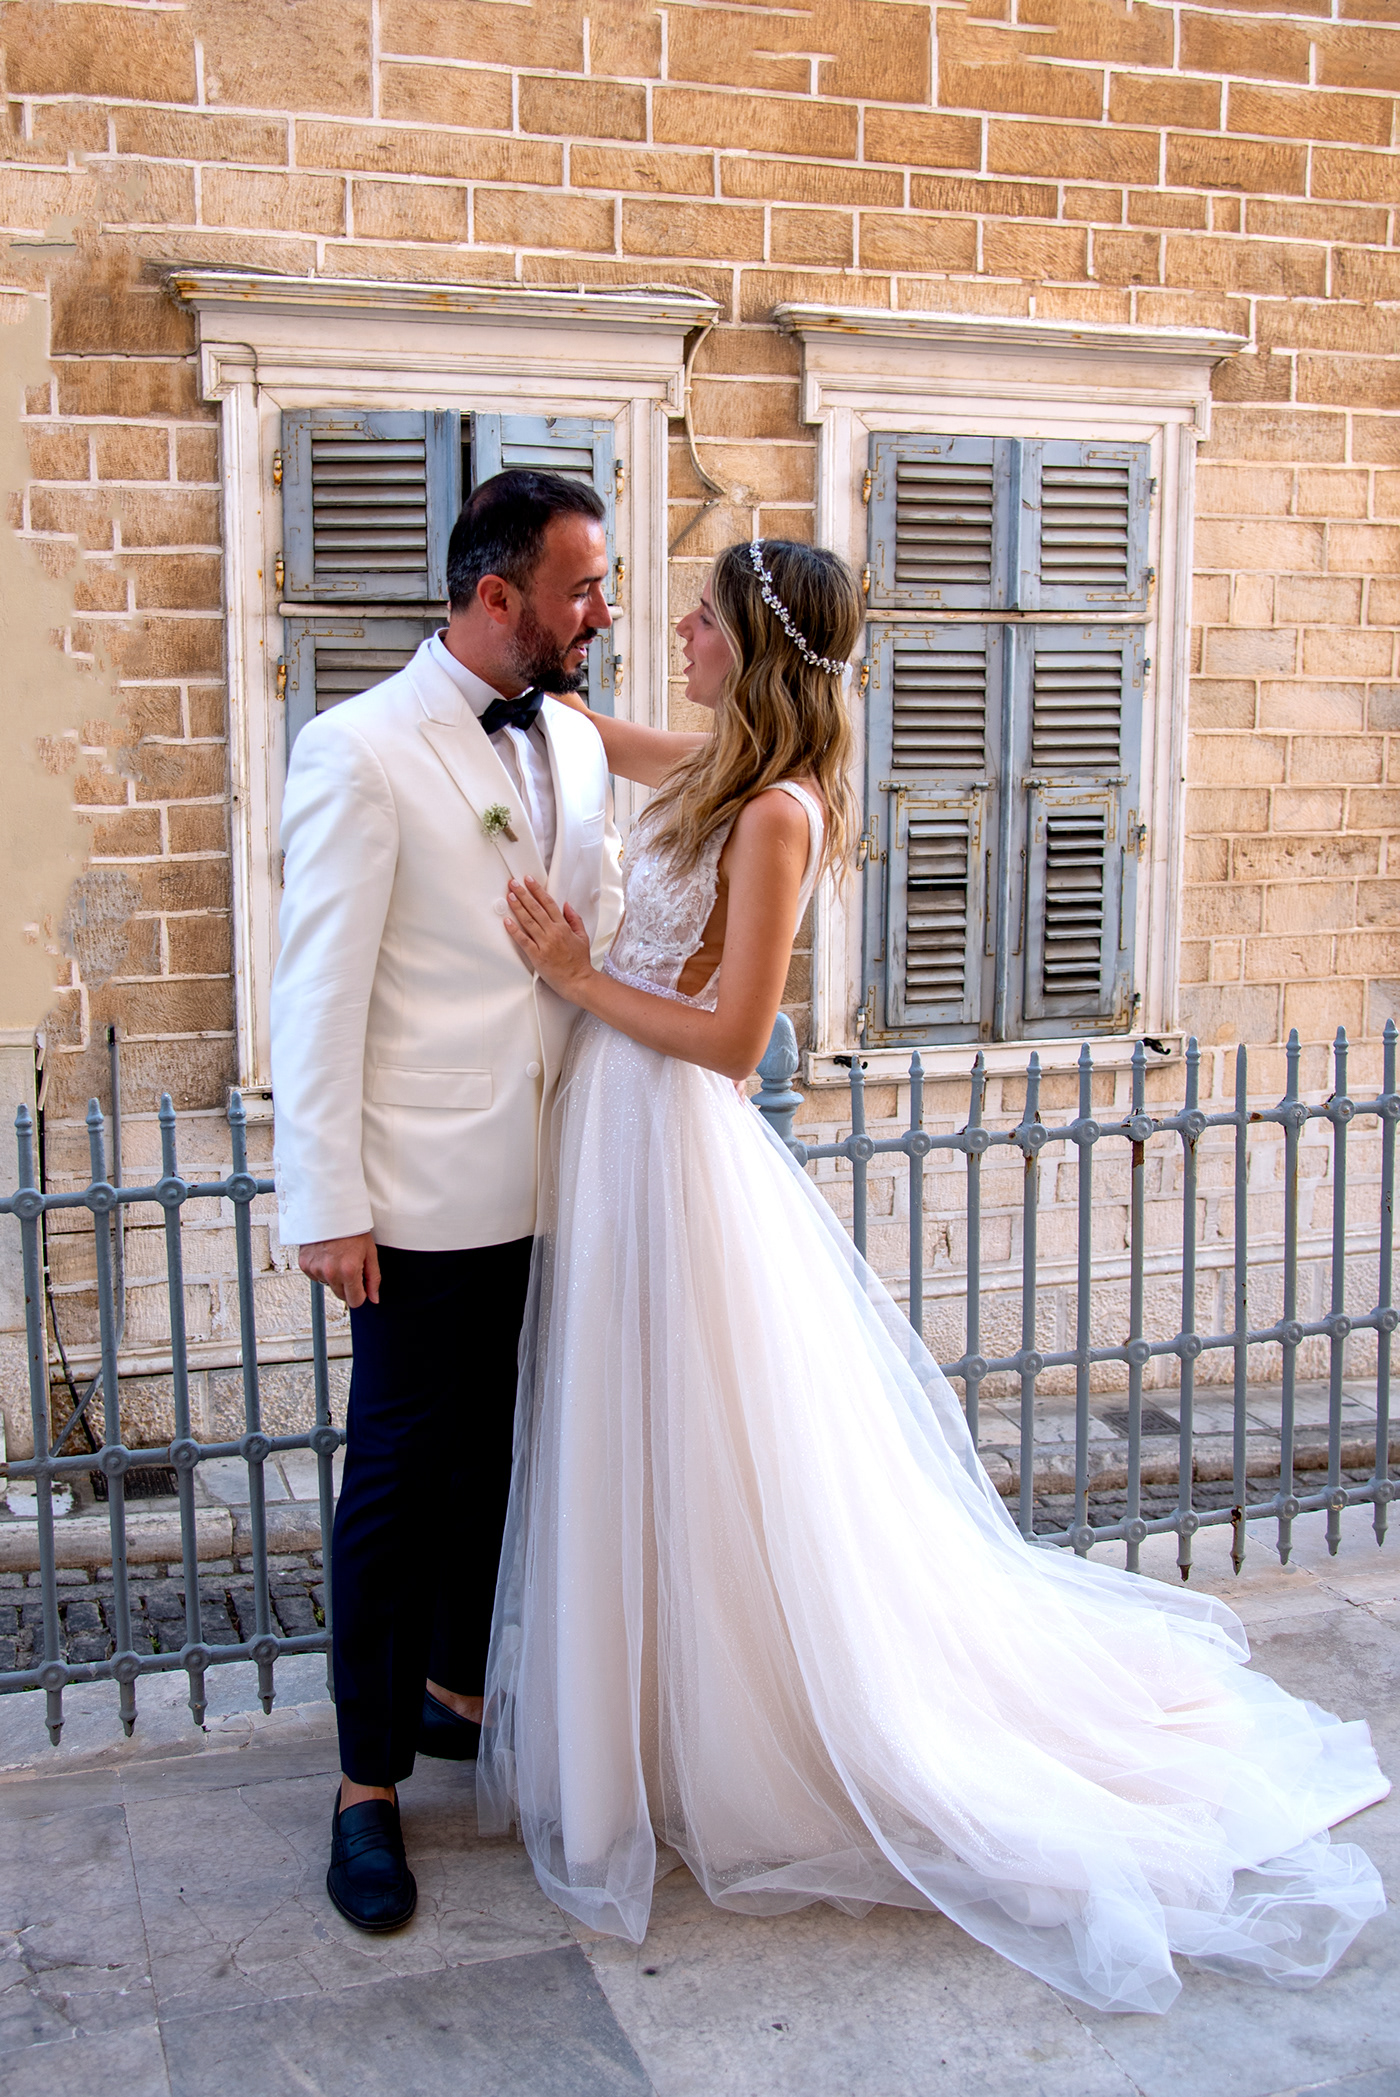 cyclades editorial greekislands Photography  syros WEDDING DRESS WeddingConcept weddinginspiration weddingphotography Weddings